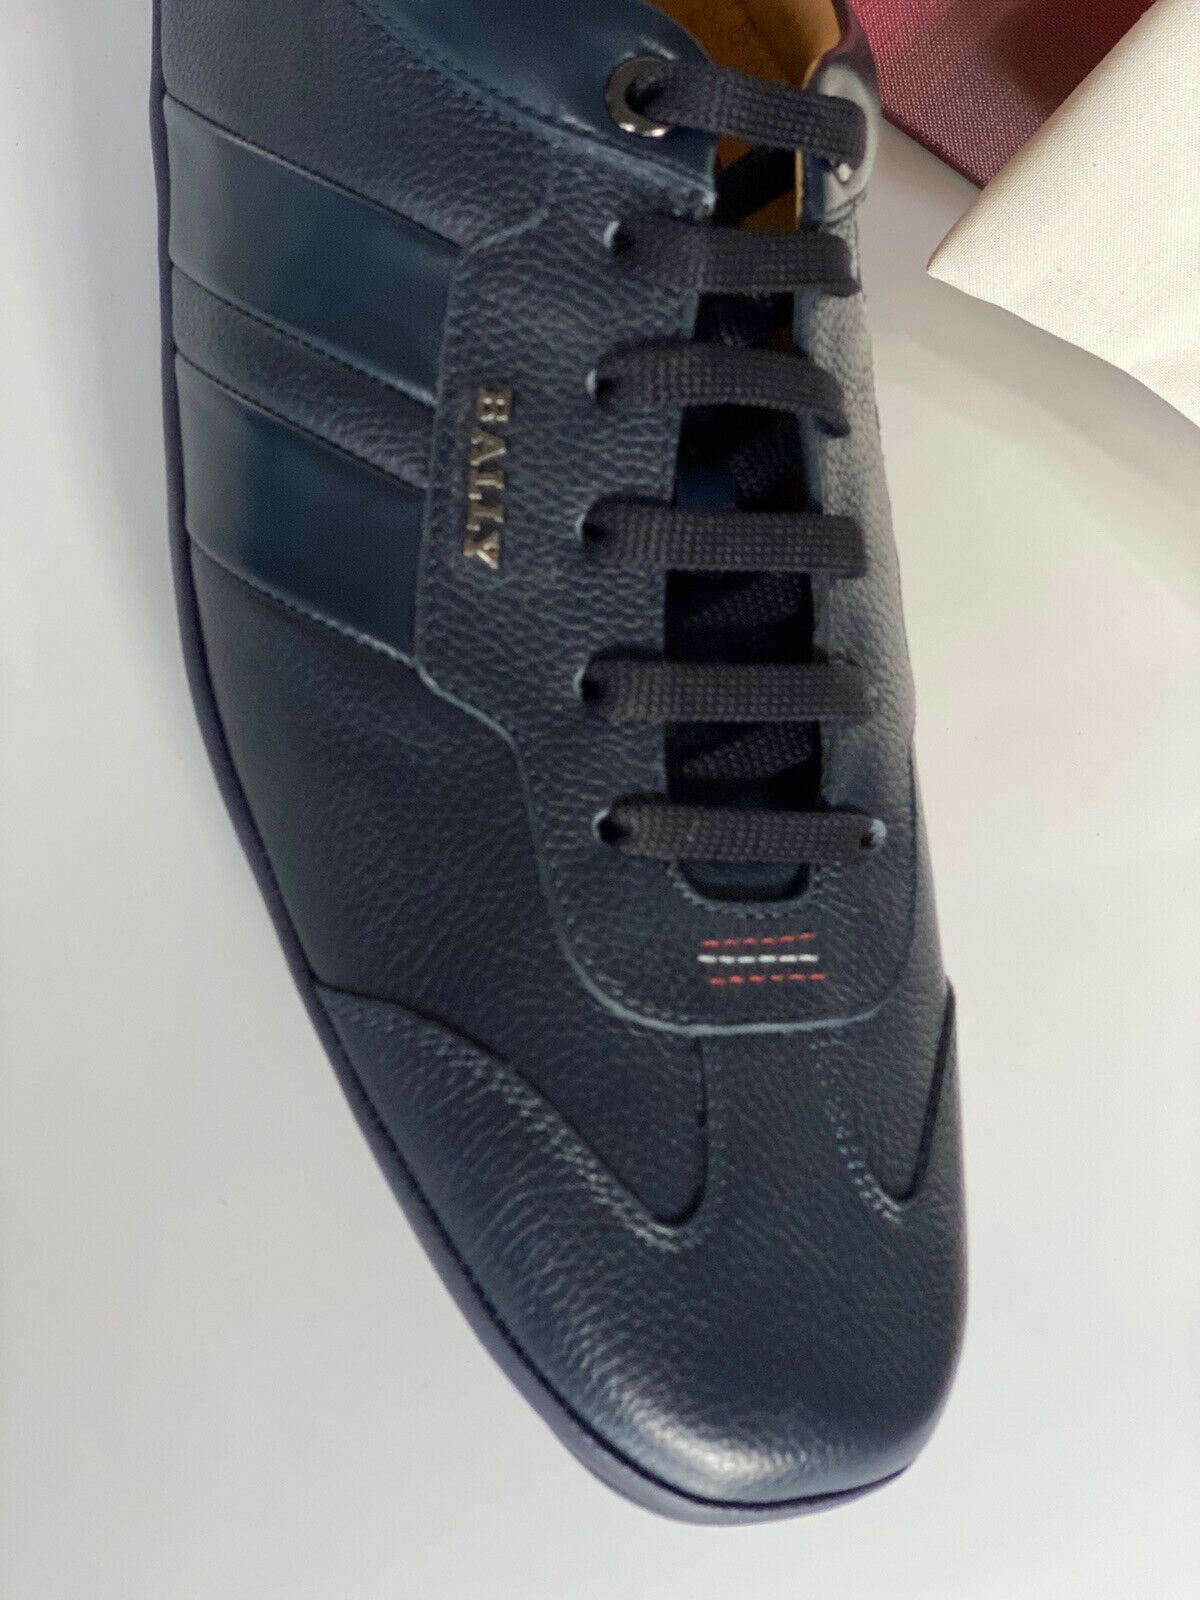 NIB Bally Primer Mens Bovine Embossed Leather Sneakers Blue 10 US 6234863 Italy